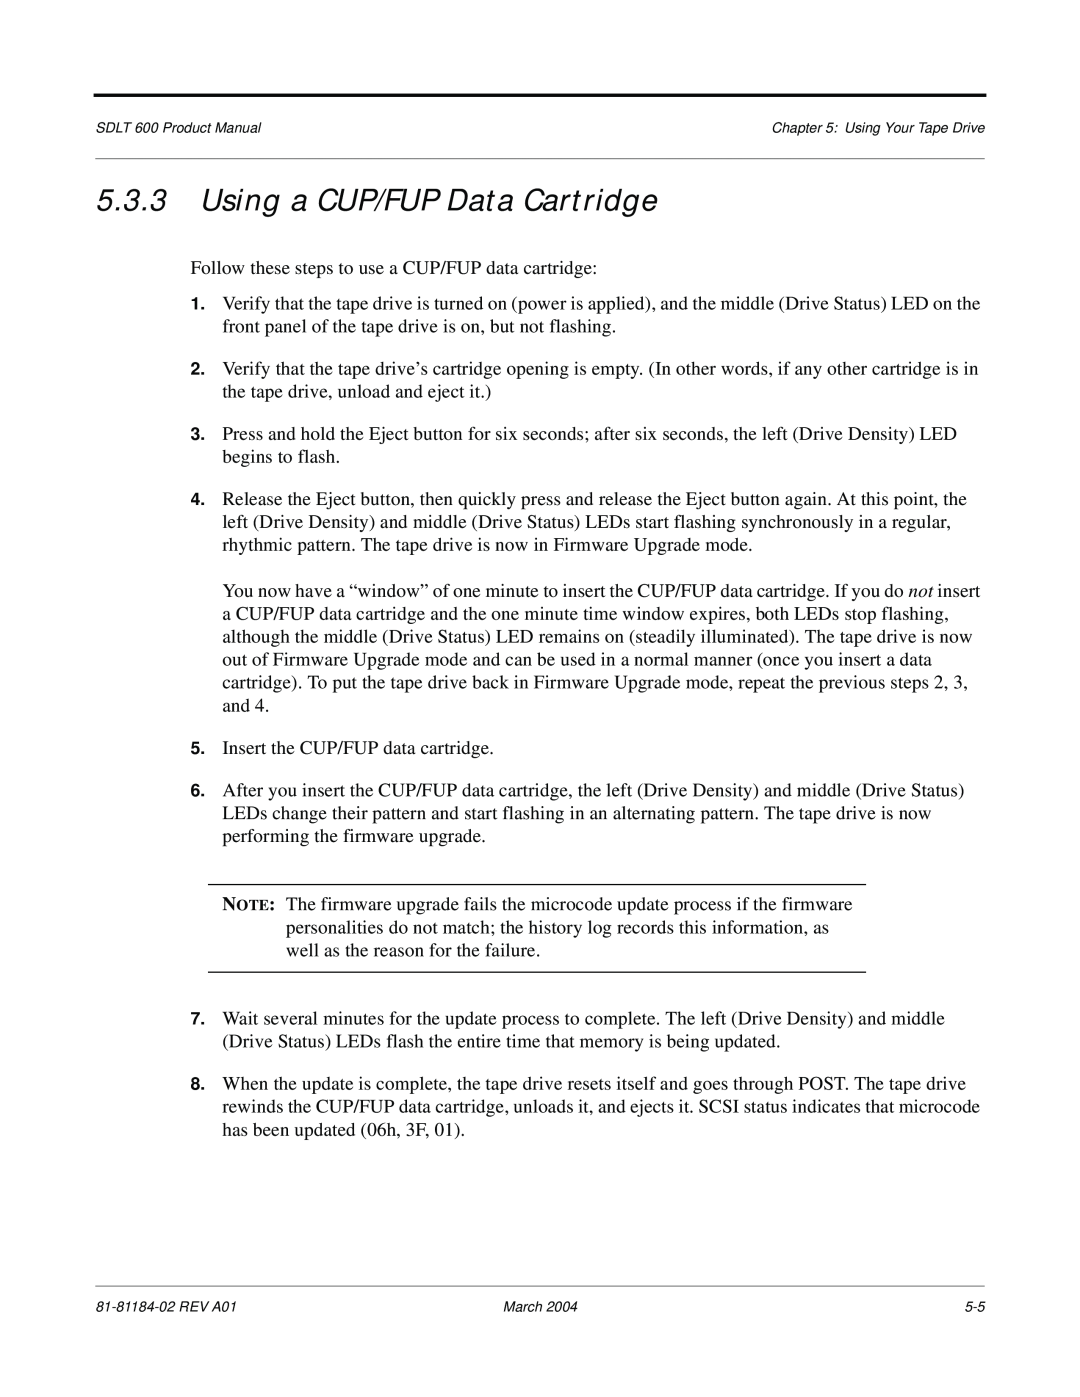 Tandberg Data 600 manual Using a CUP/FUP Data Cartridge 